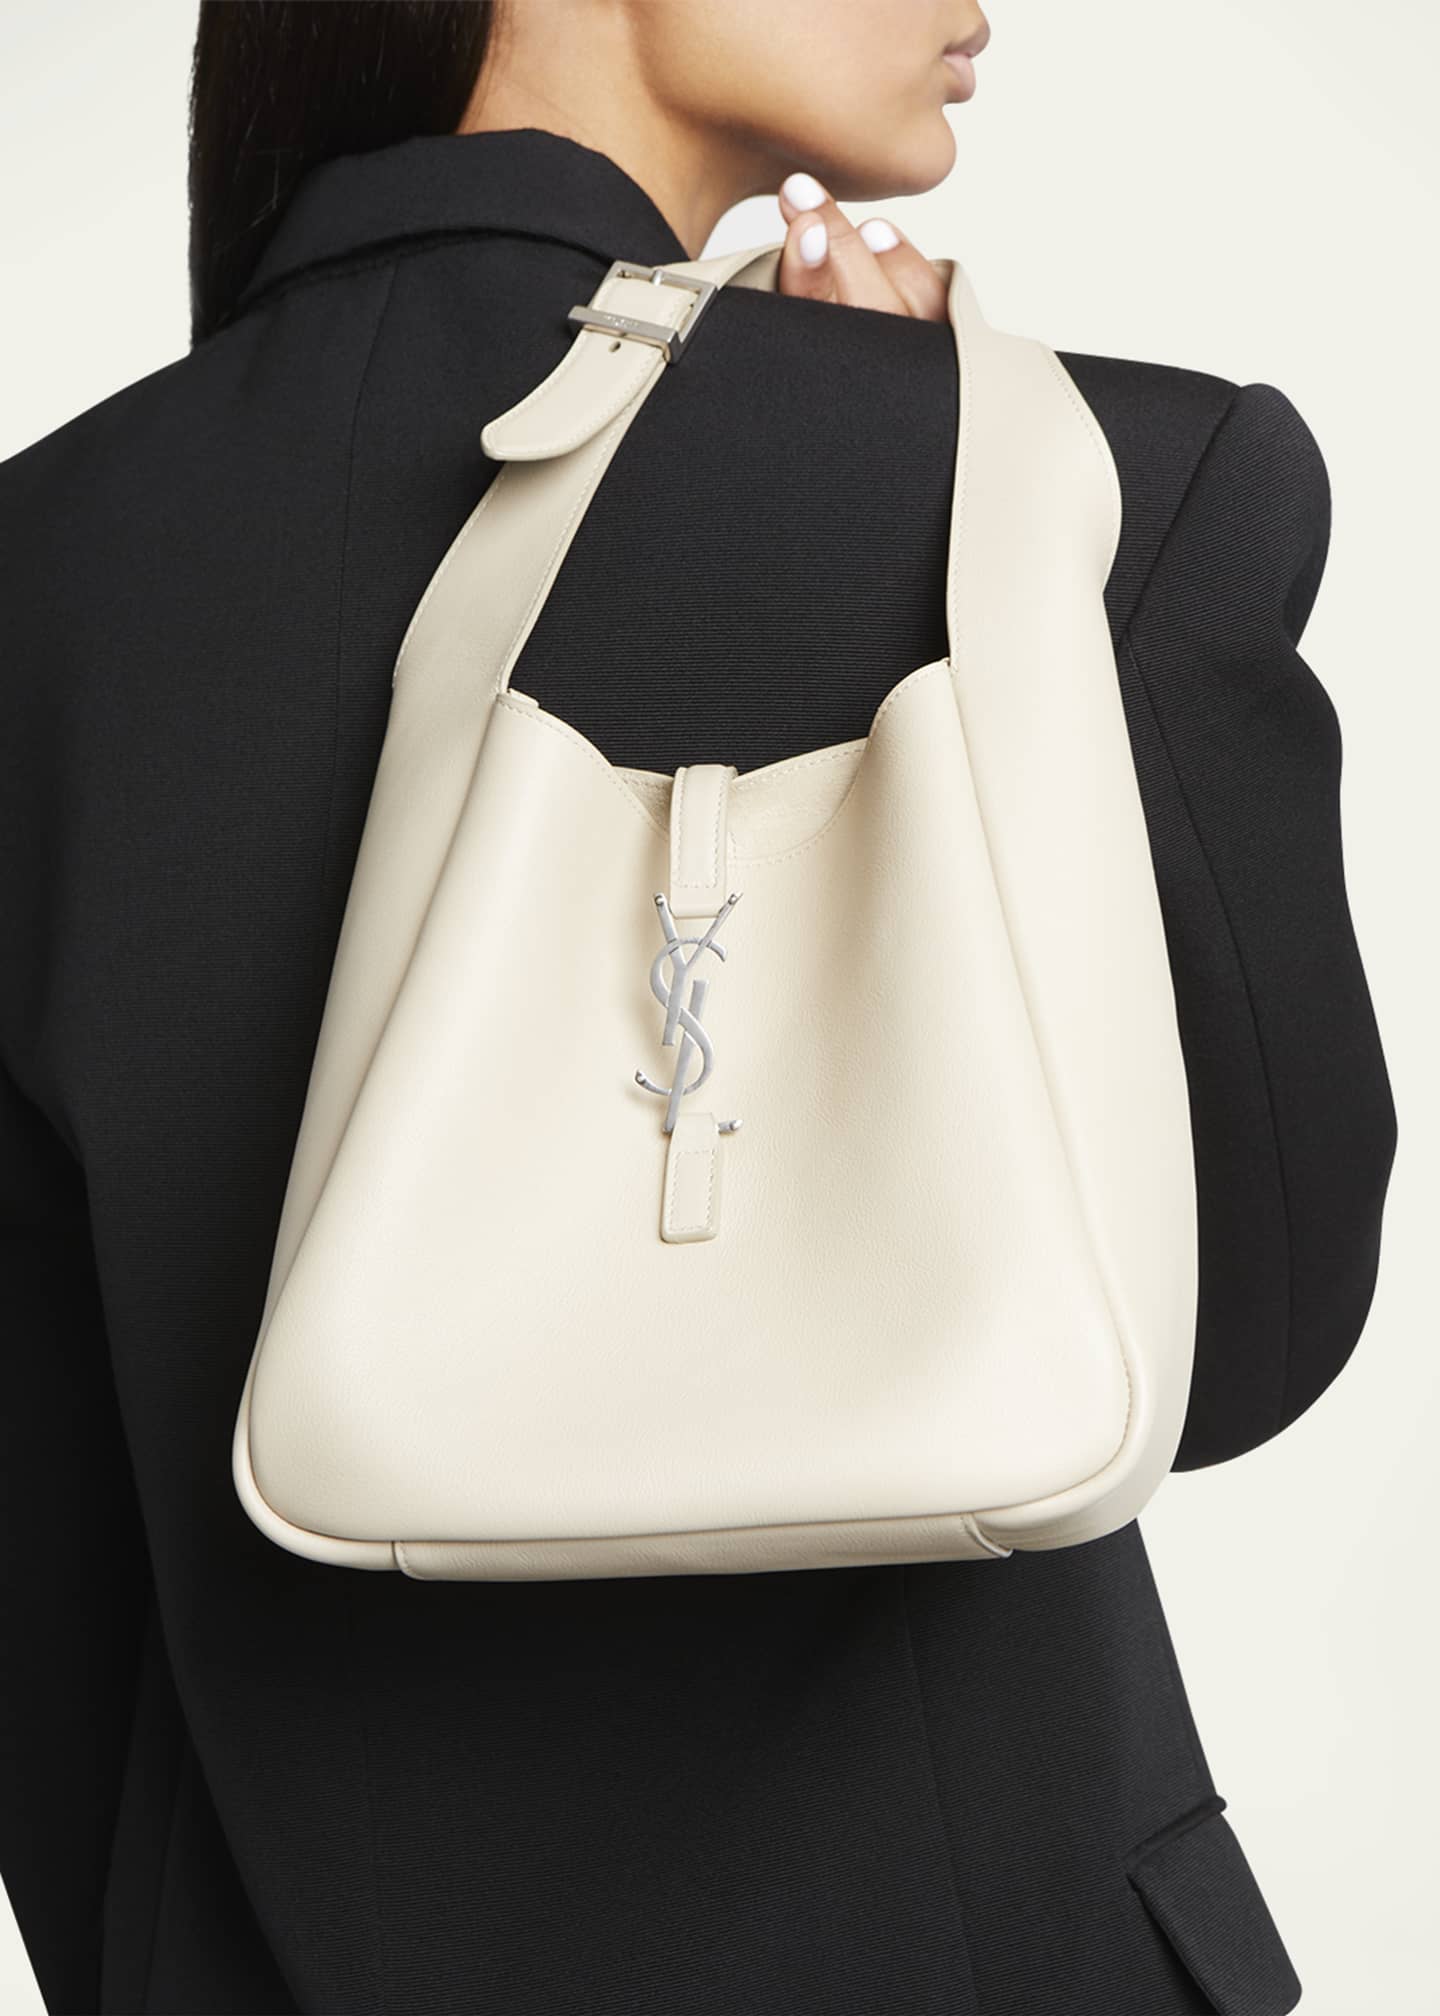 Saint Laurent Le 5 A 7 Small Leather Shoulder Bag - Bergdorf Goodman